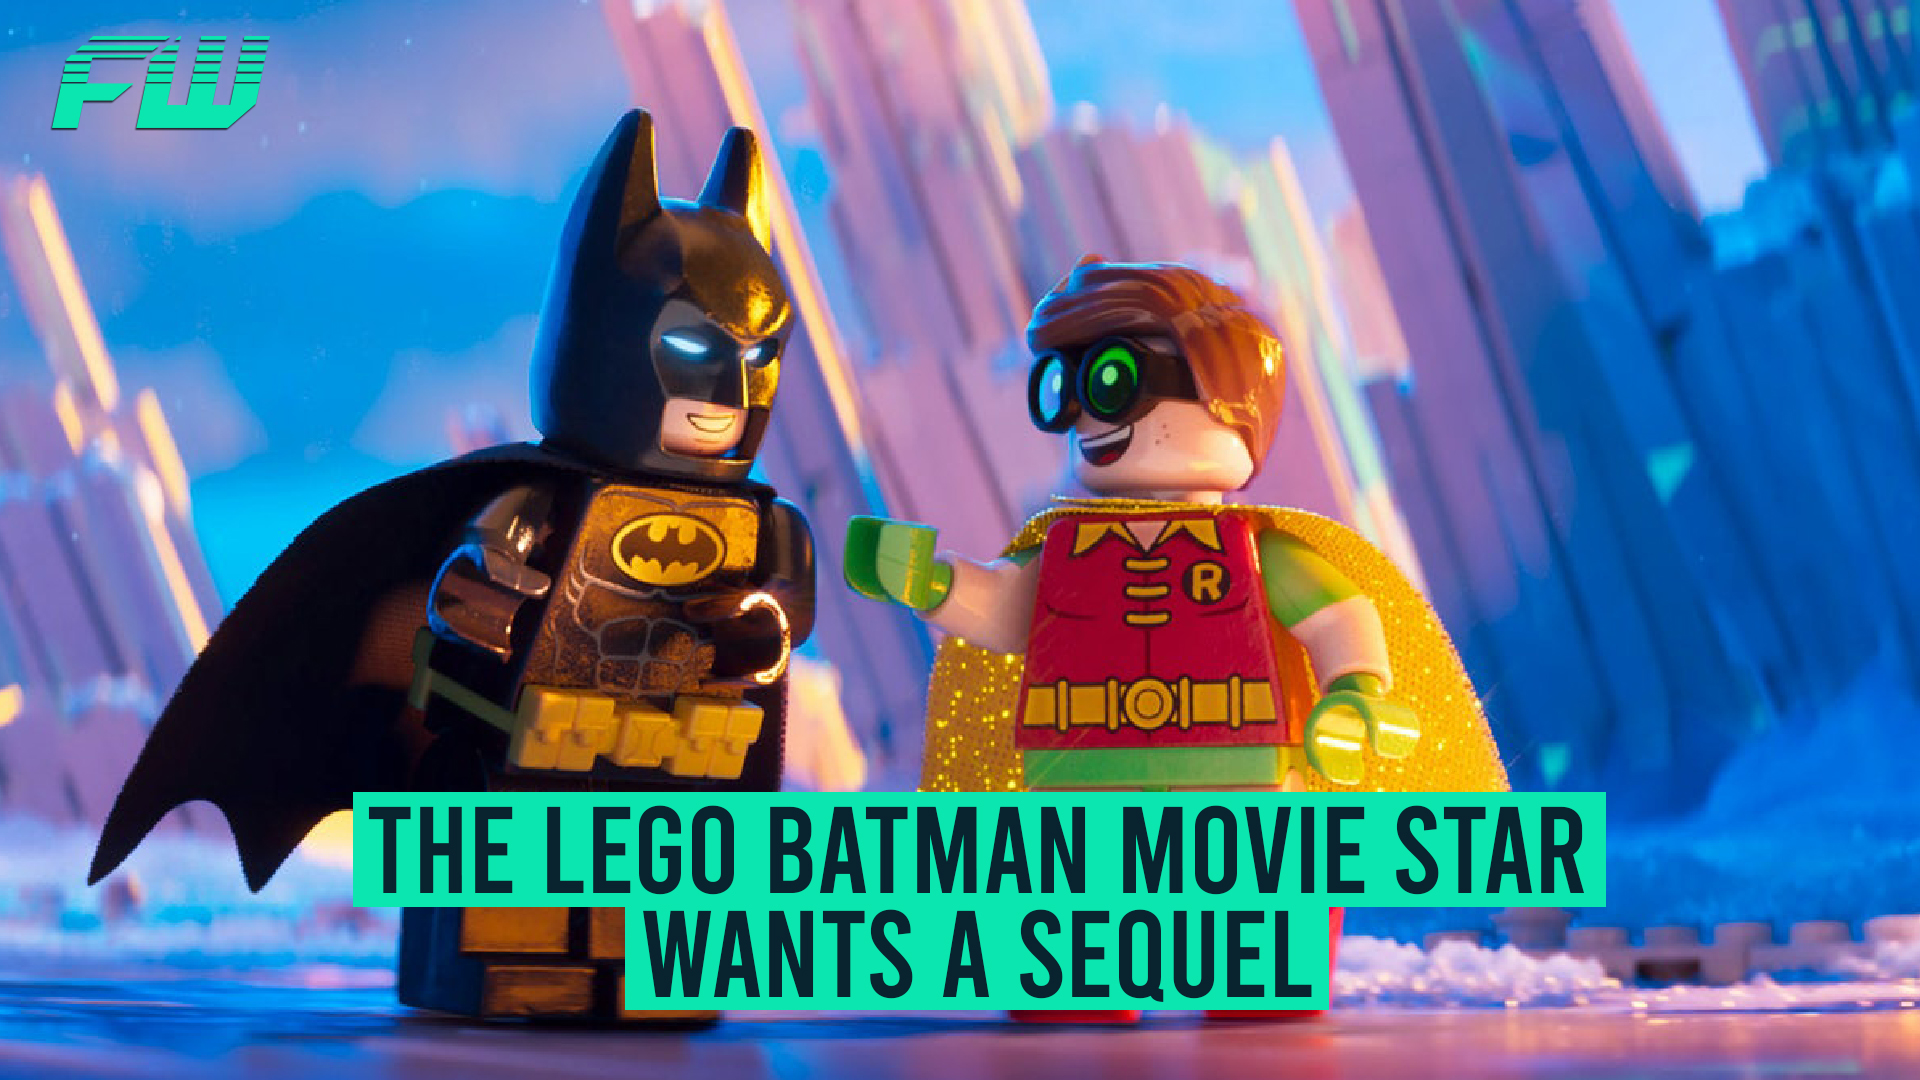 The LEGO Batman Movie Star Wants A Sequel